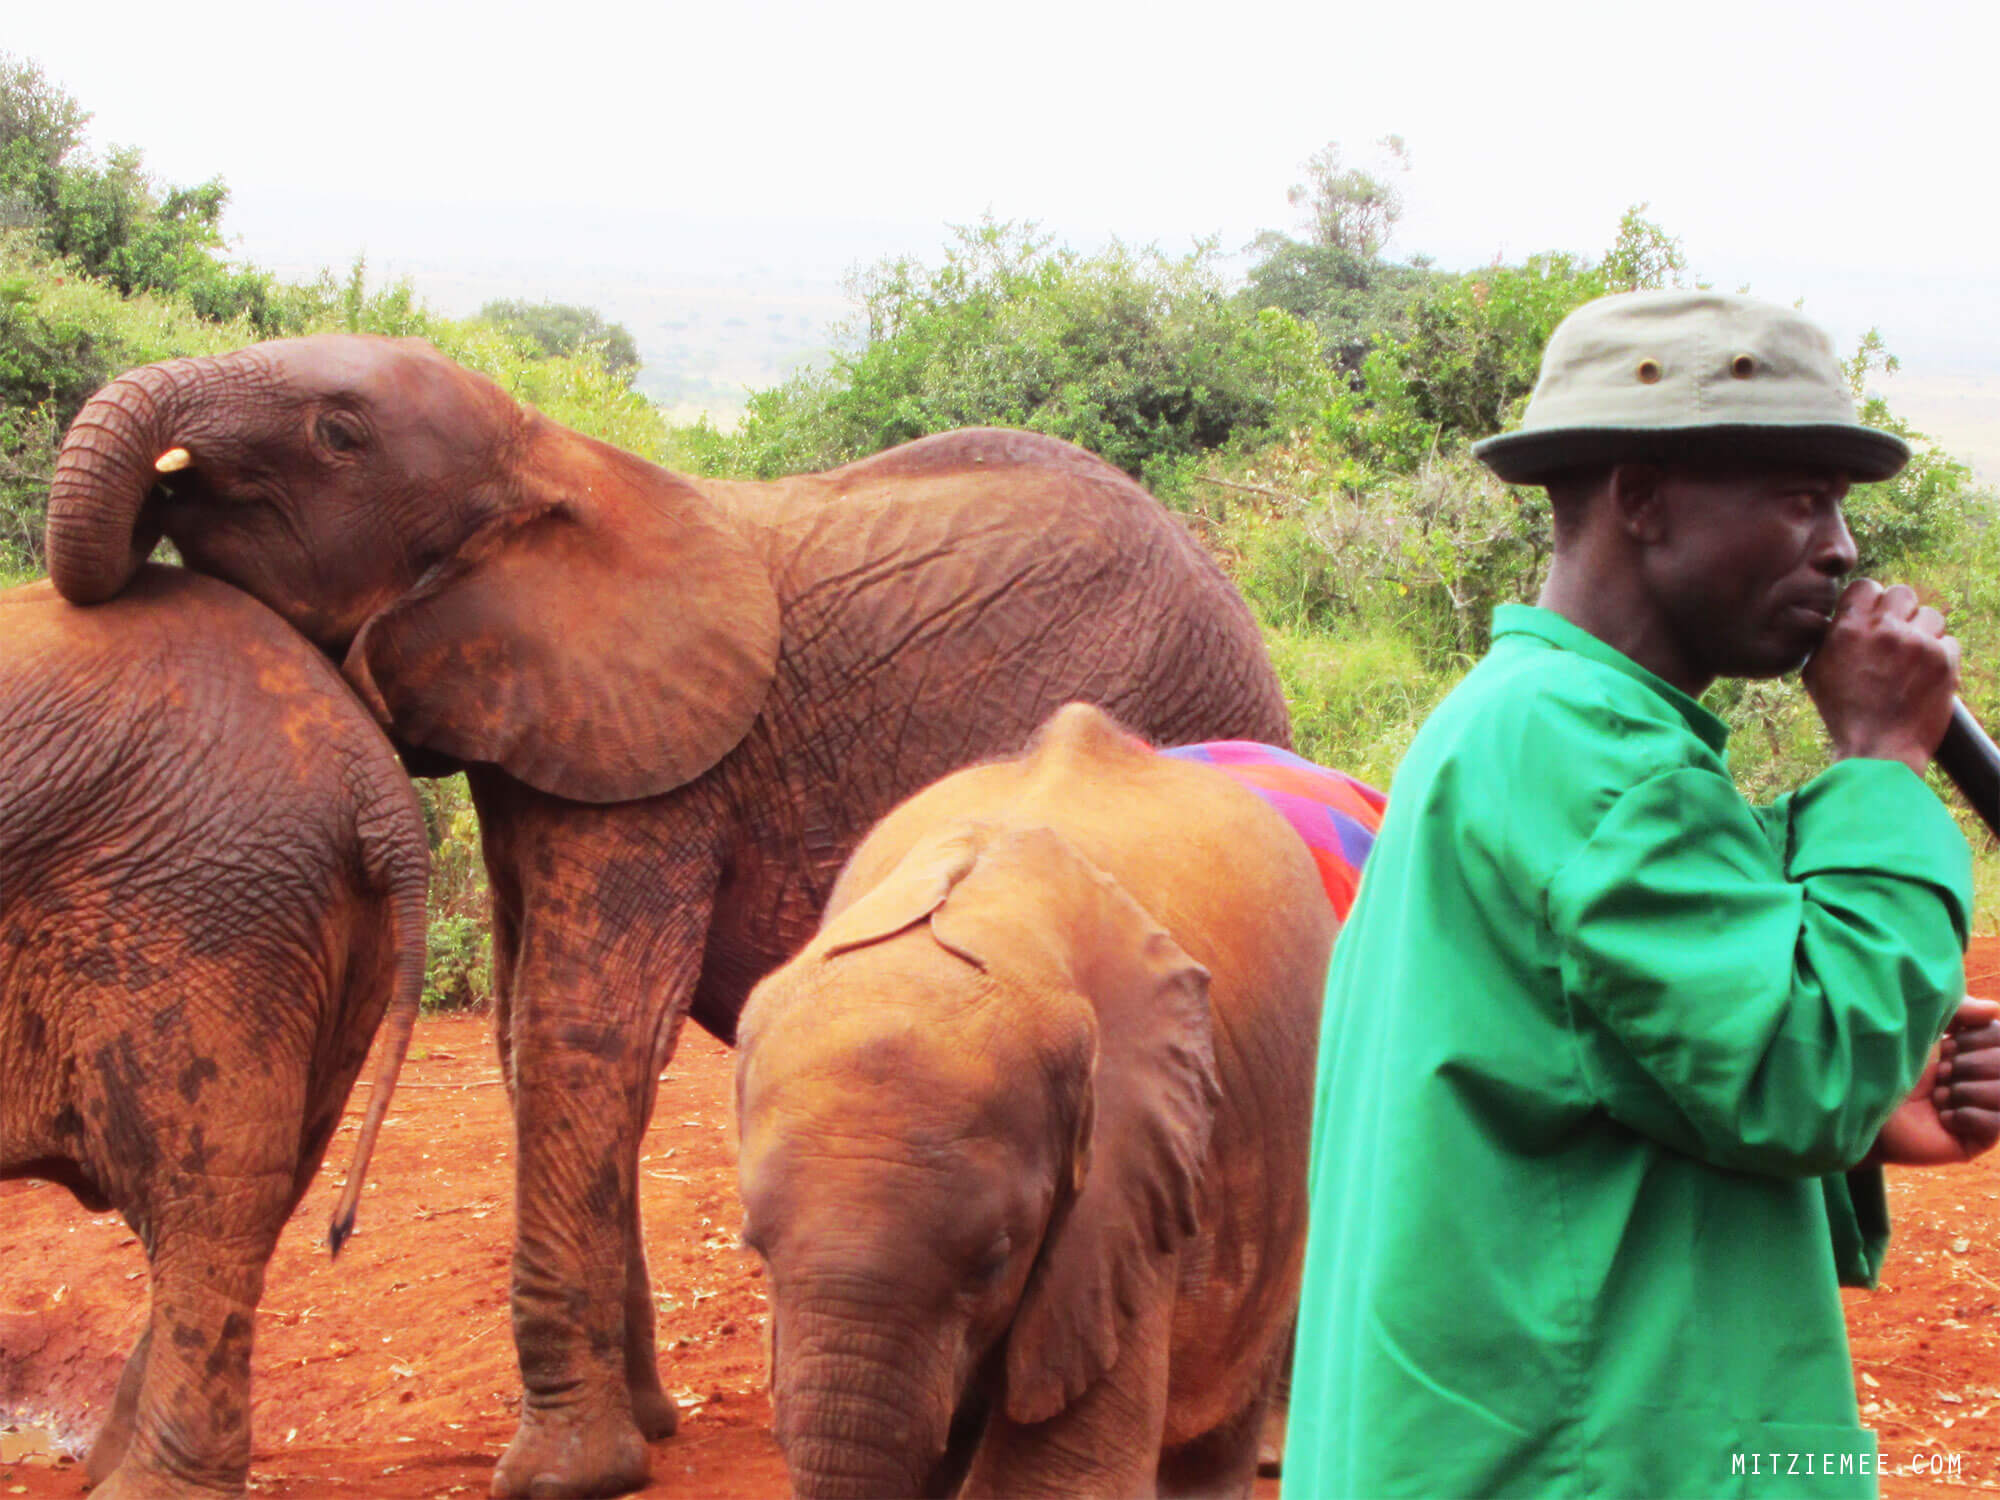 The Sheldrick Wildlife Trust Elephant Nursery in Nairobi